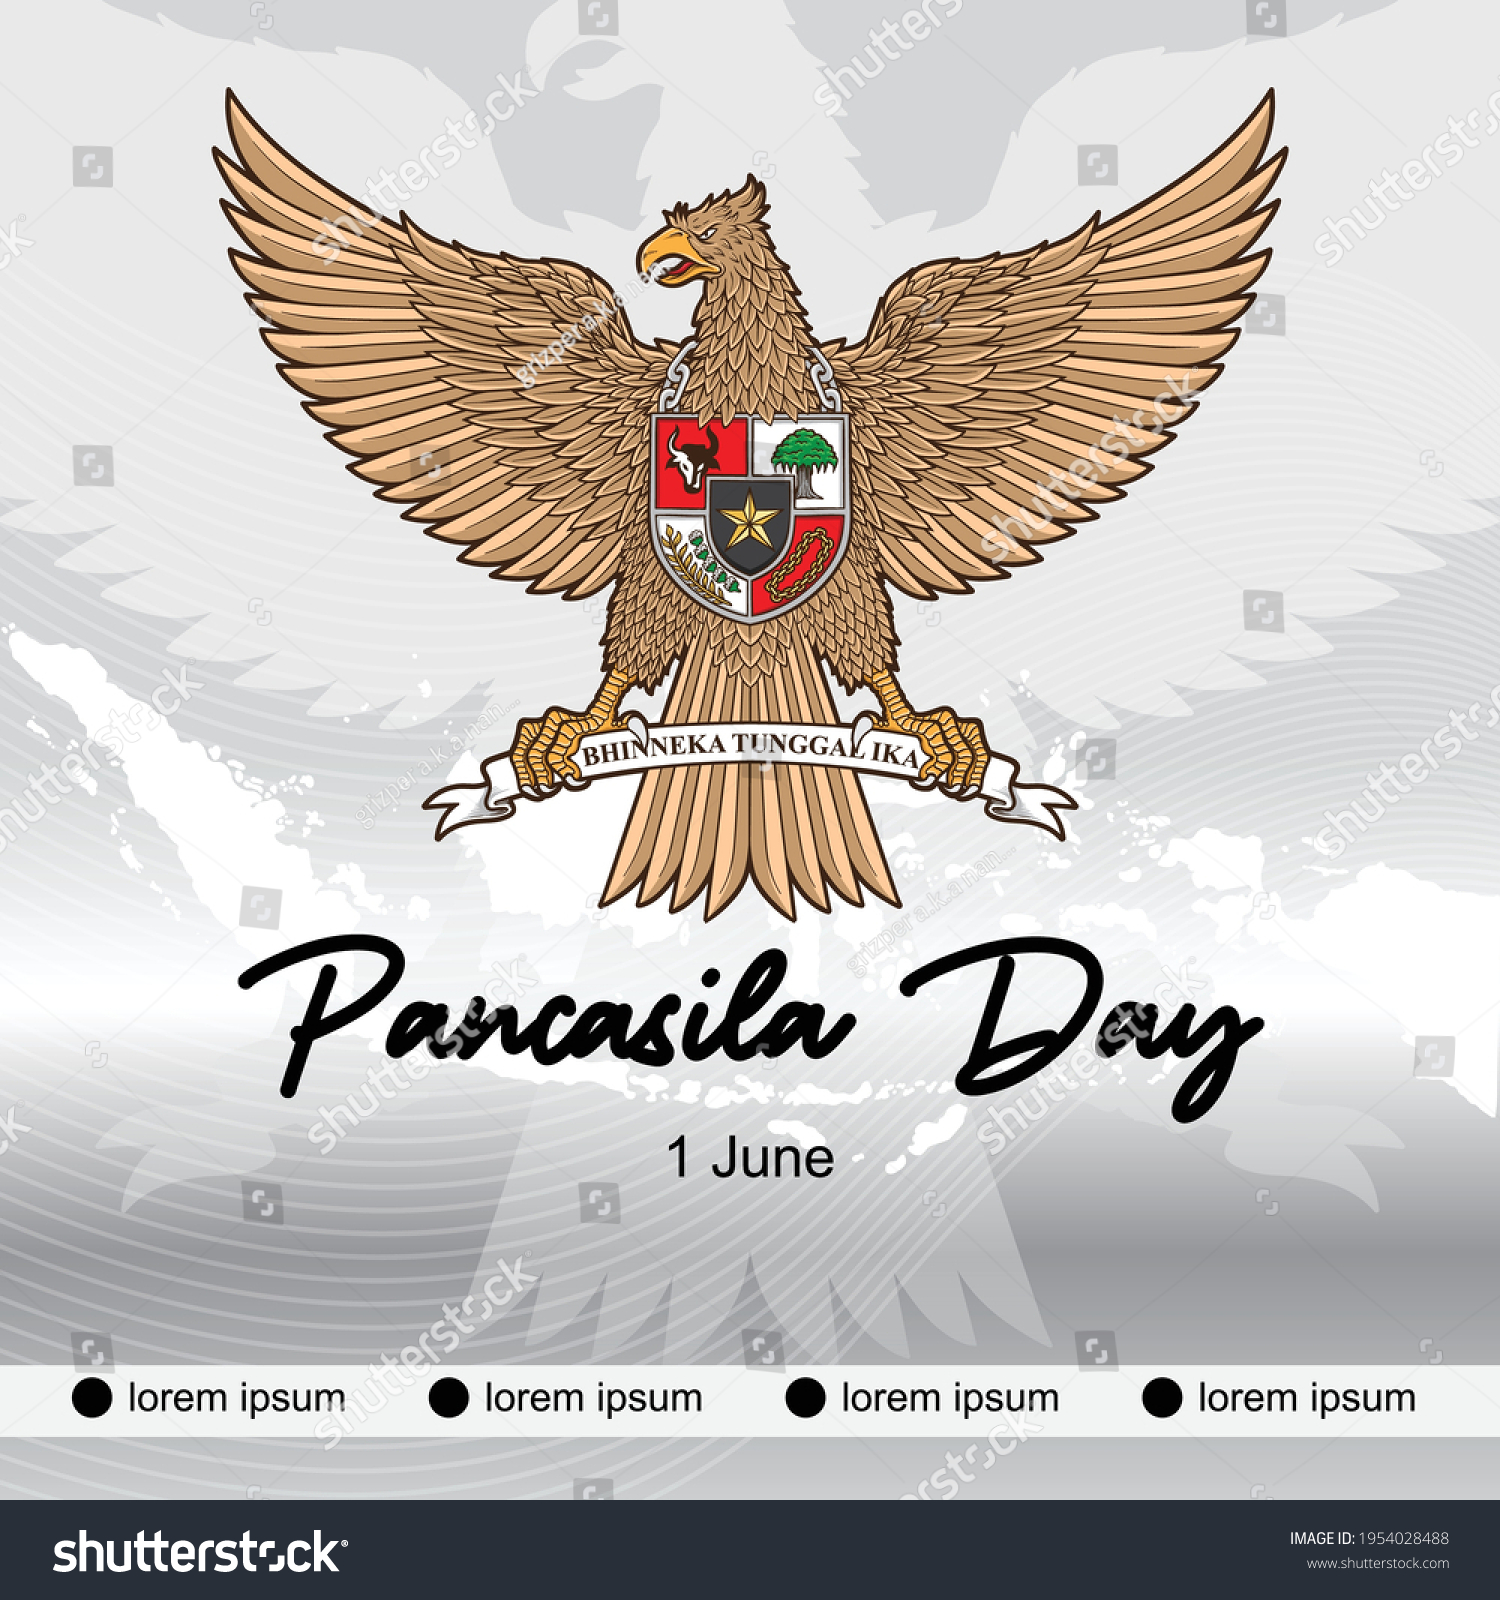 Born Day Of Garuda Pancasila Illustration Royalty Free Stock Vector